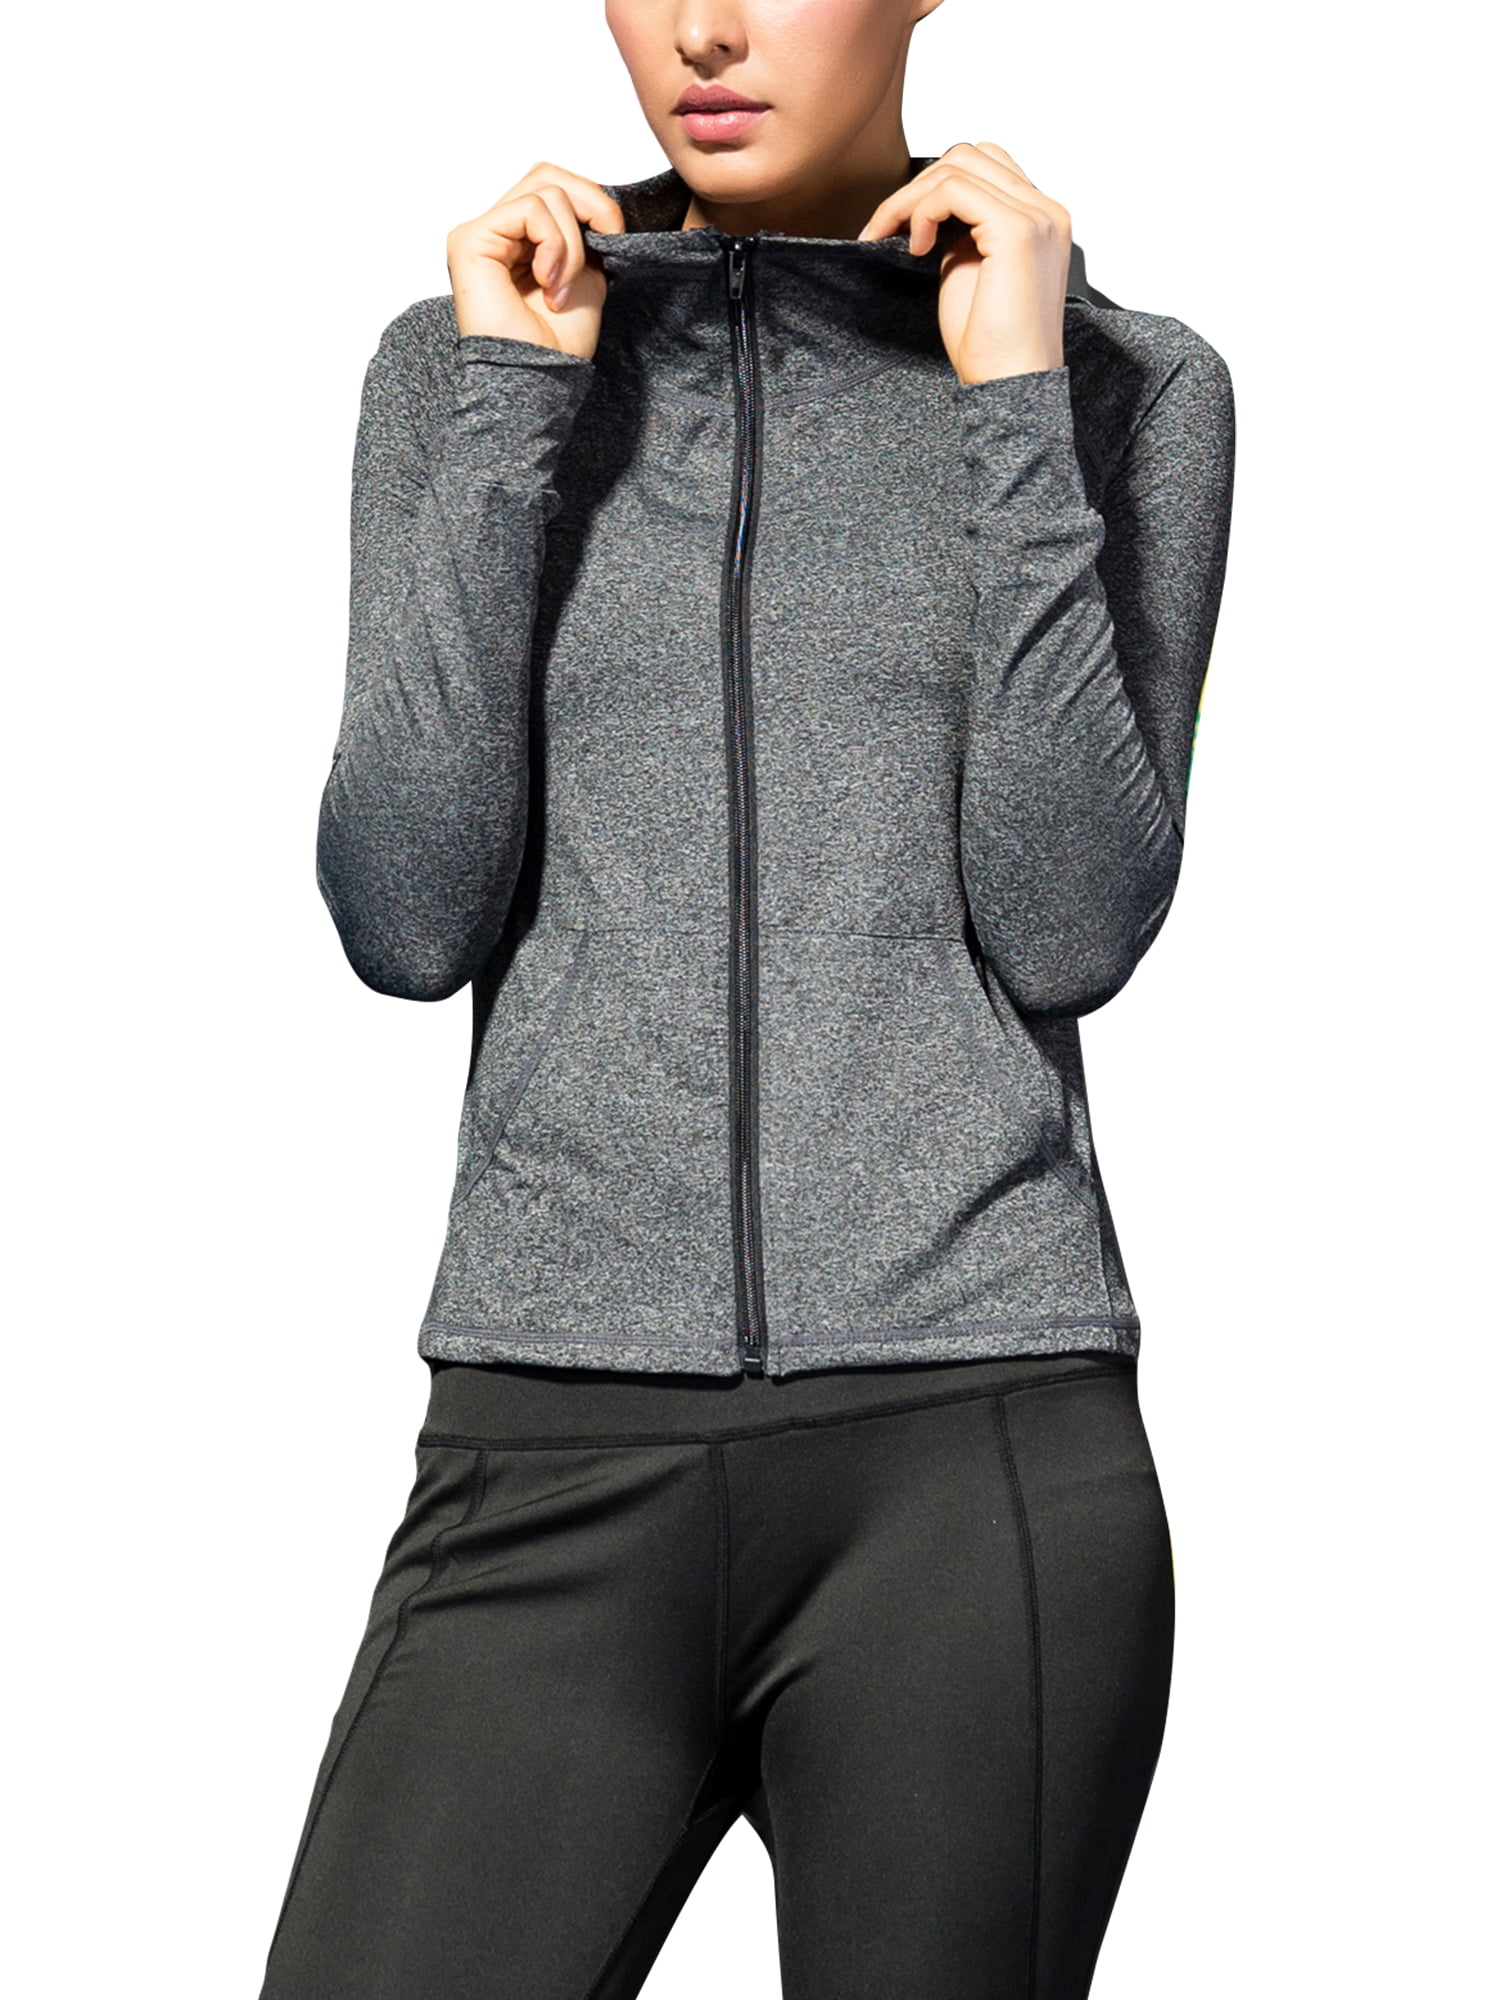 Womens Hooded Jacket Coat Zip Up Tops Hoodies Jumper Outerwear Sports Plus Size 